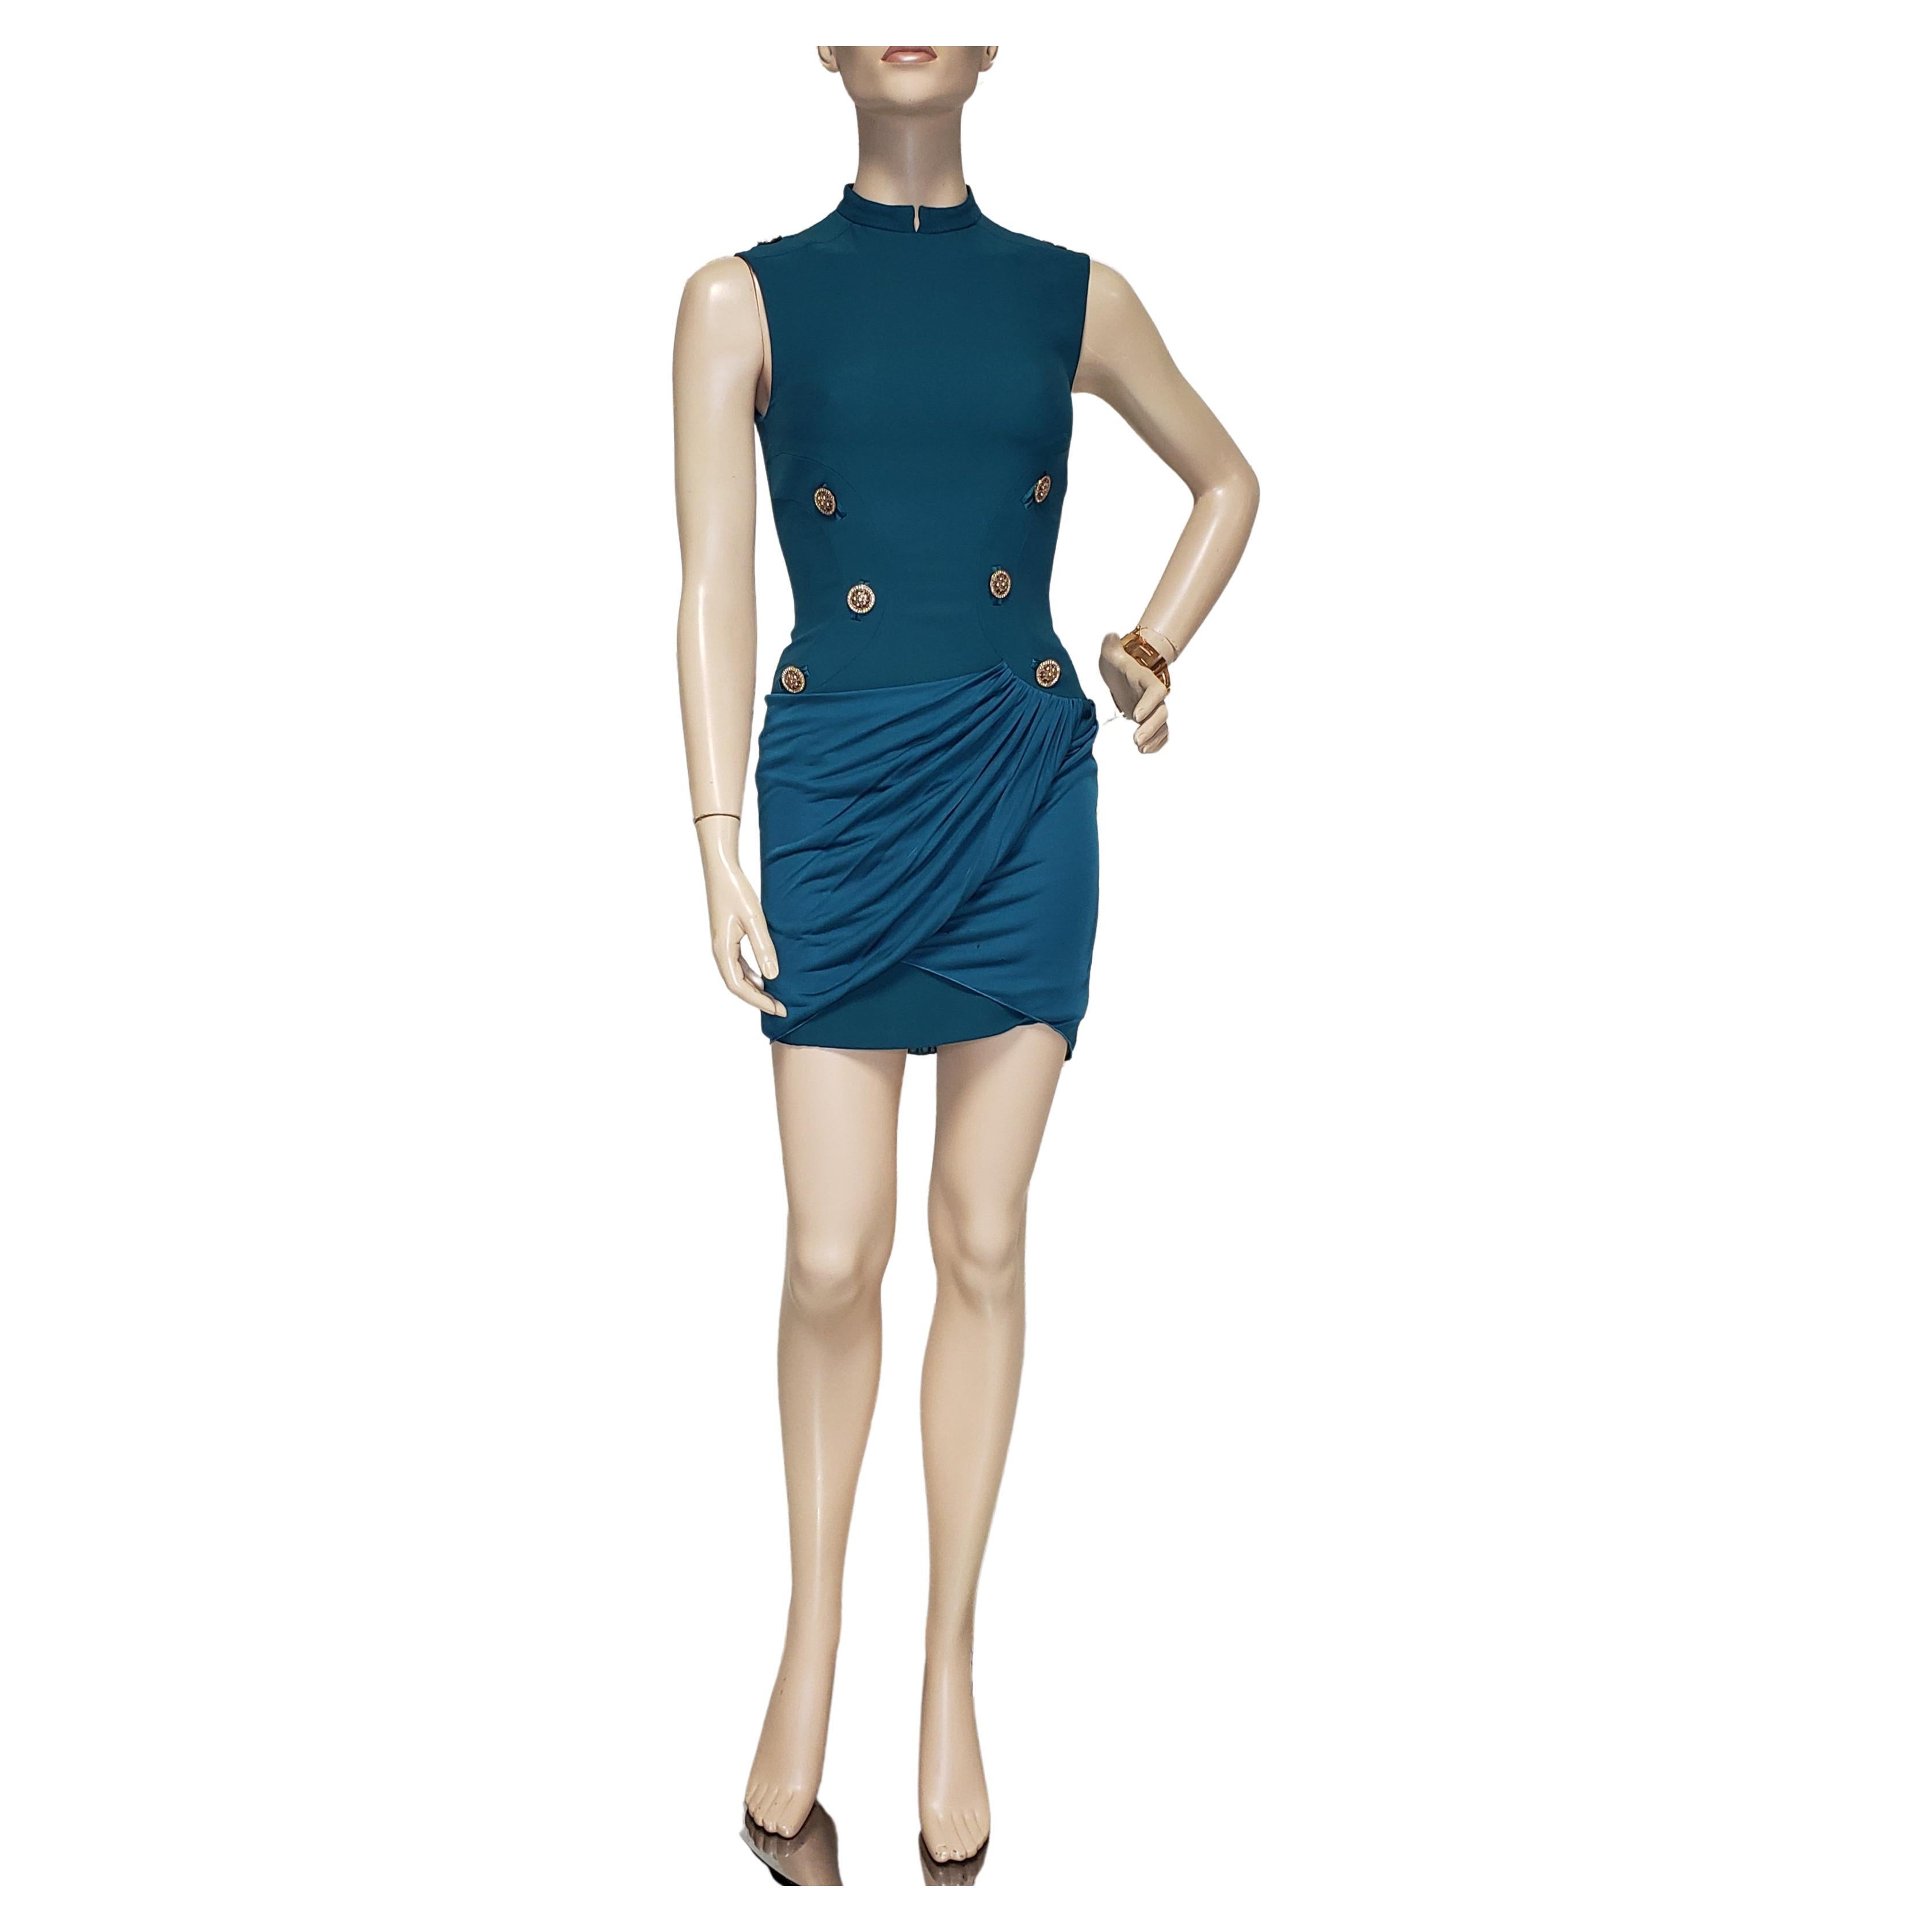 F/W 2014 look # 37 NEW VERSACE GREEN MINI DRESS 38 - 2 For Sale at